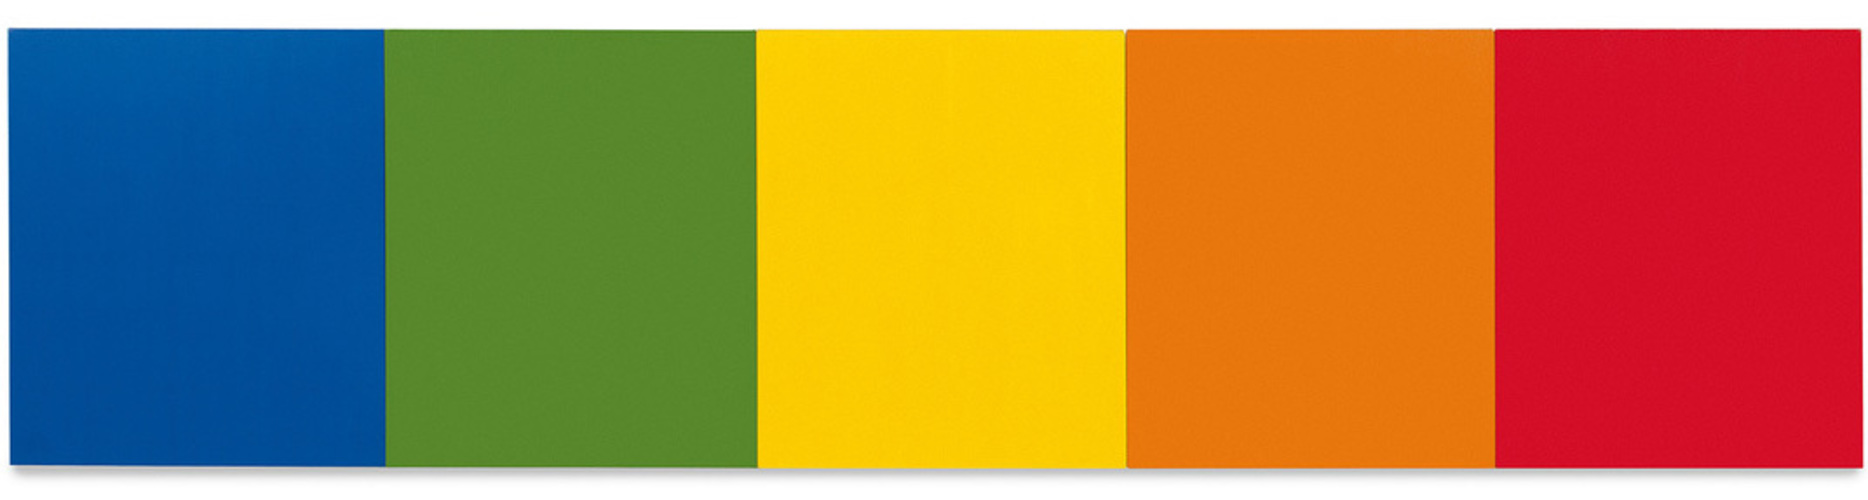 Ellsworth Kelly, Bleu, vert, jaune, orange, rouge, 1966